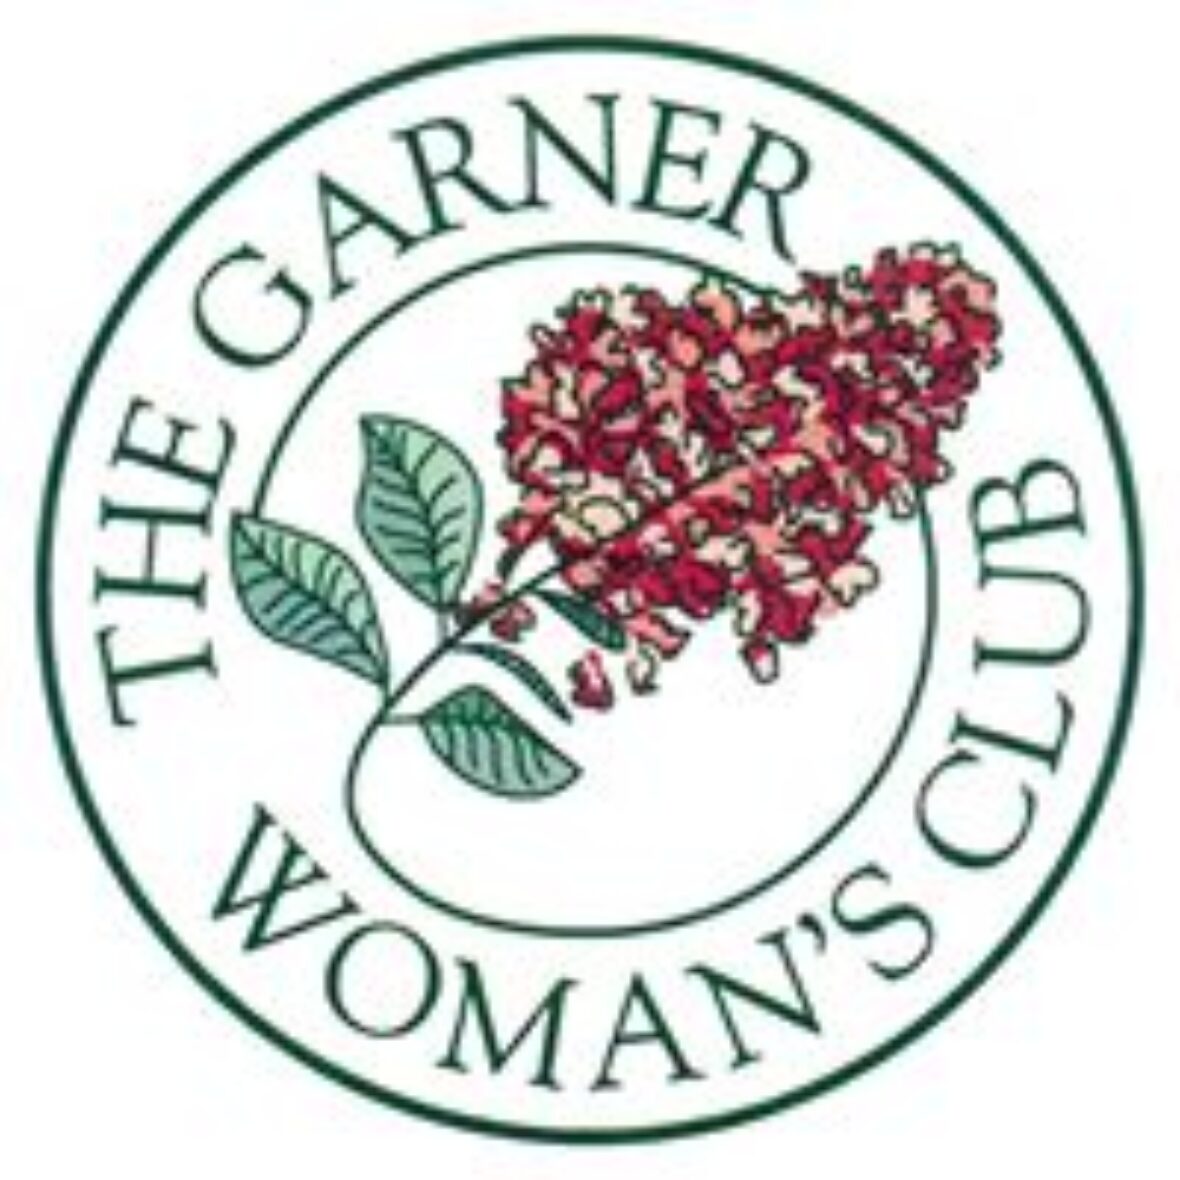 The Garner Woman's Club